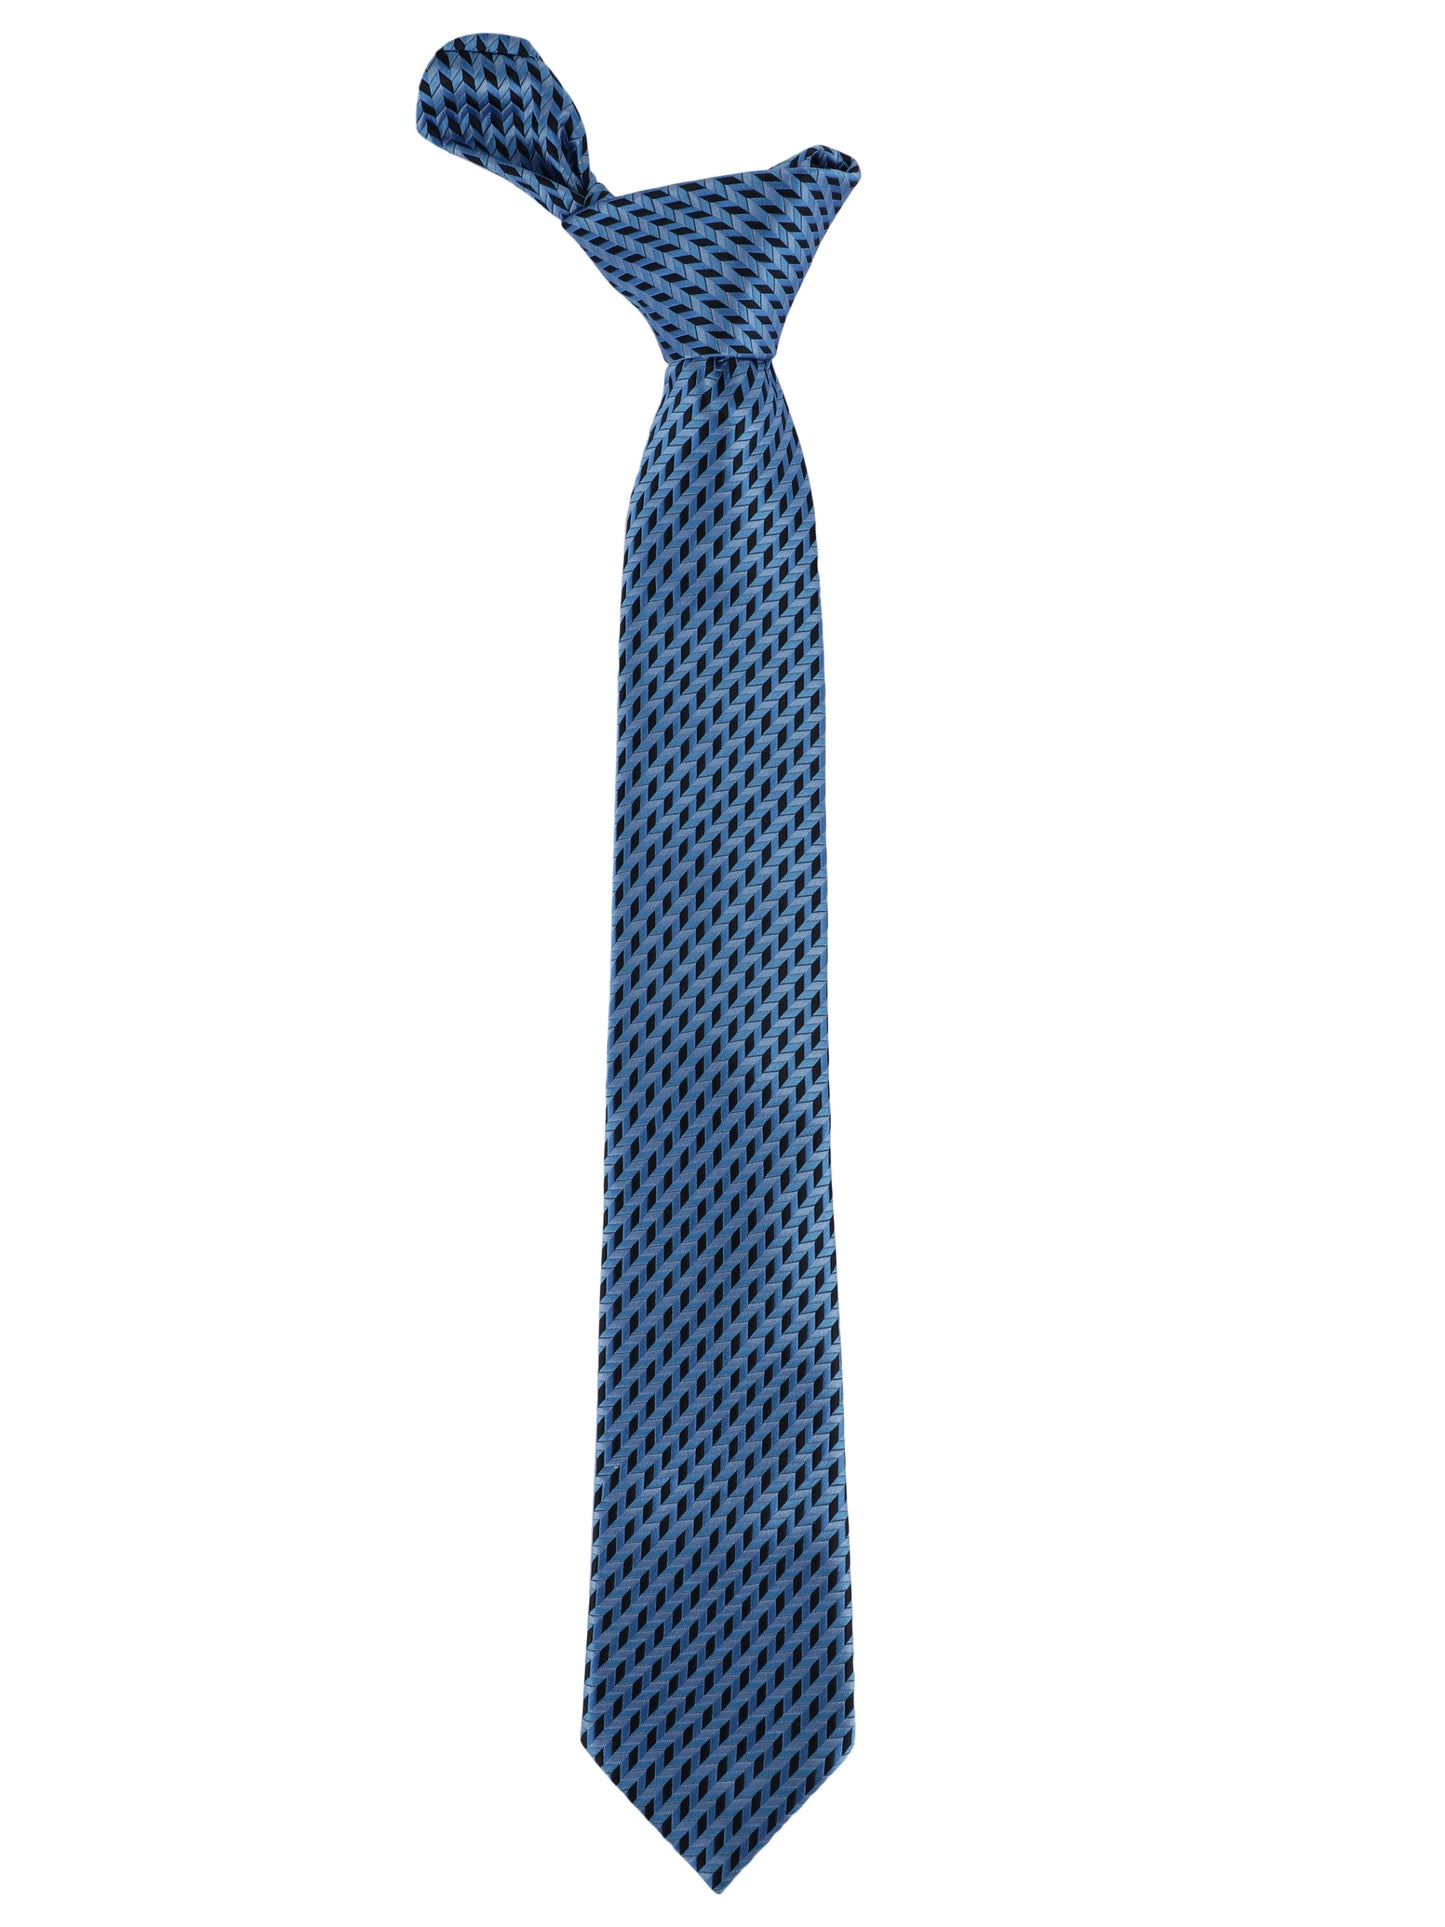 Alvaro Castagnino Microfiber Blue Colored Printed Necktie with same fabric box for Men